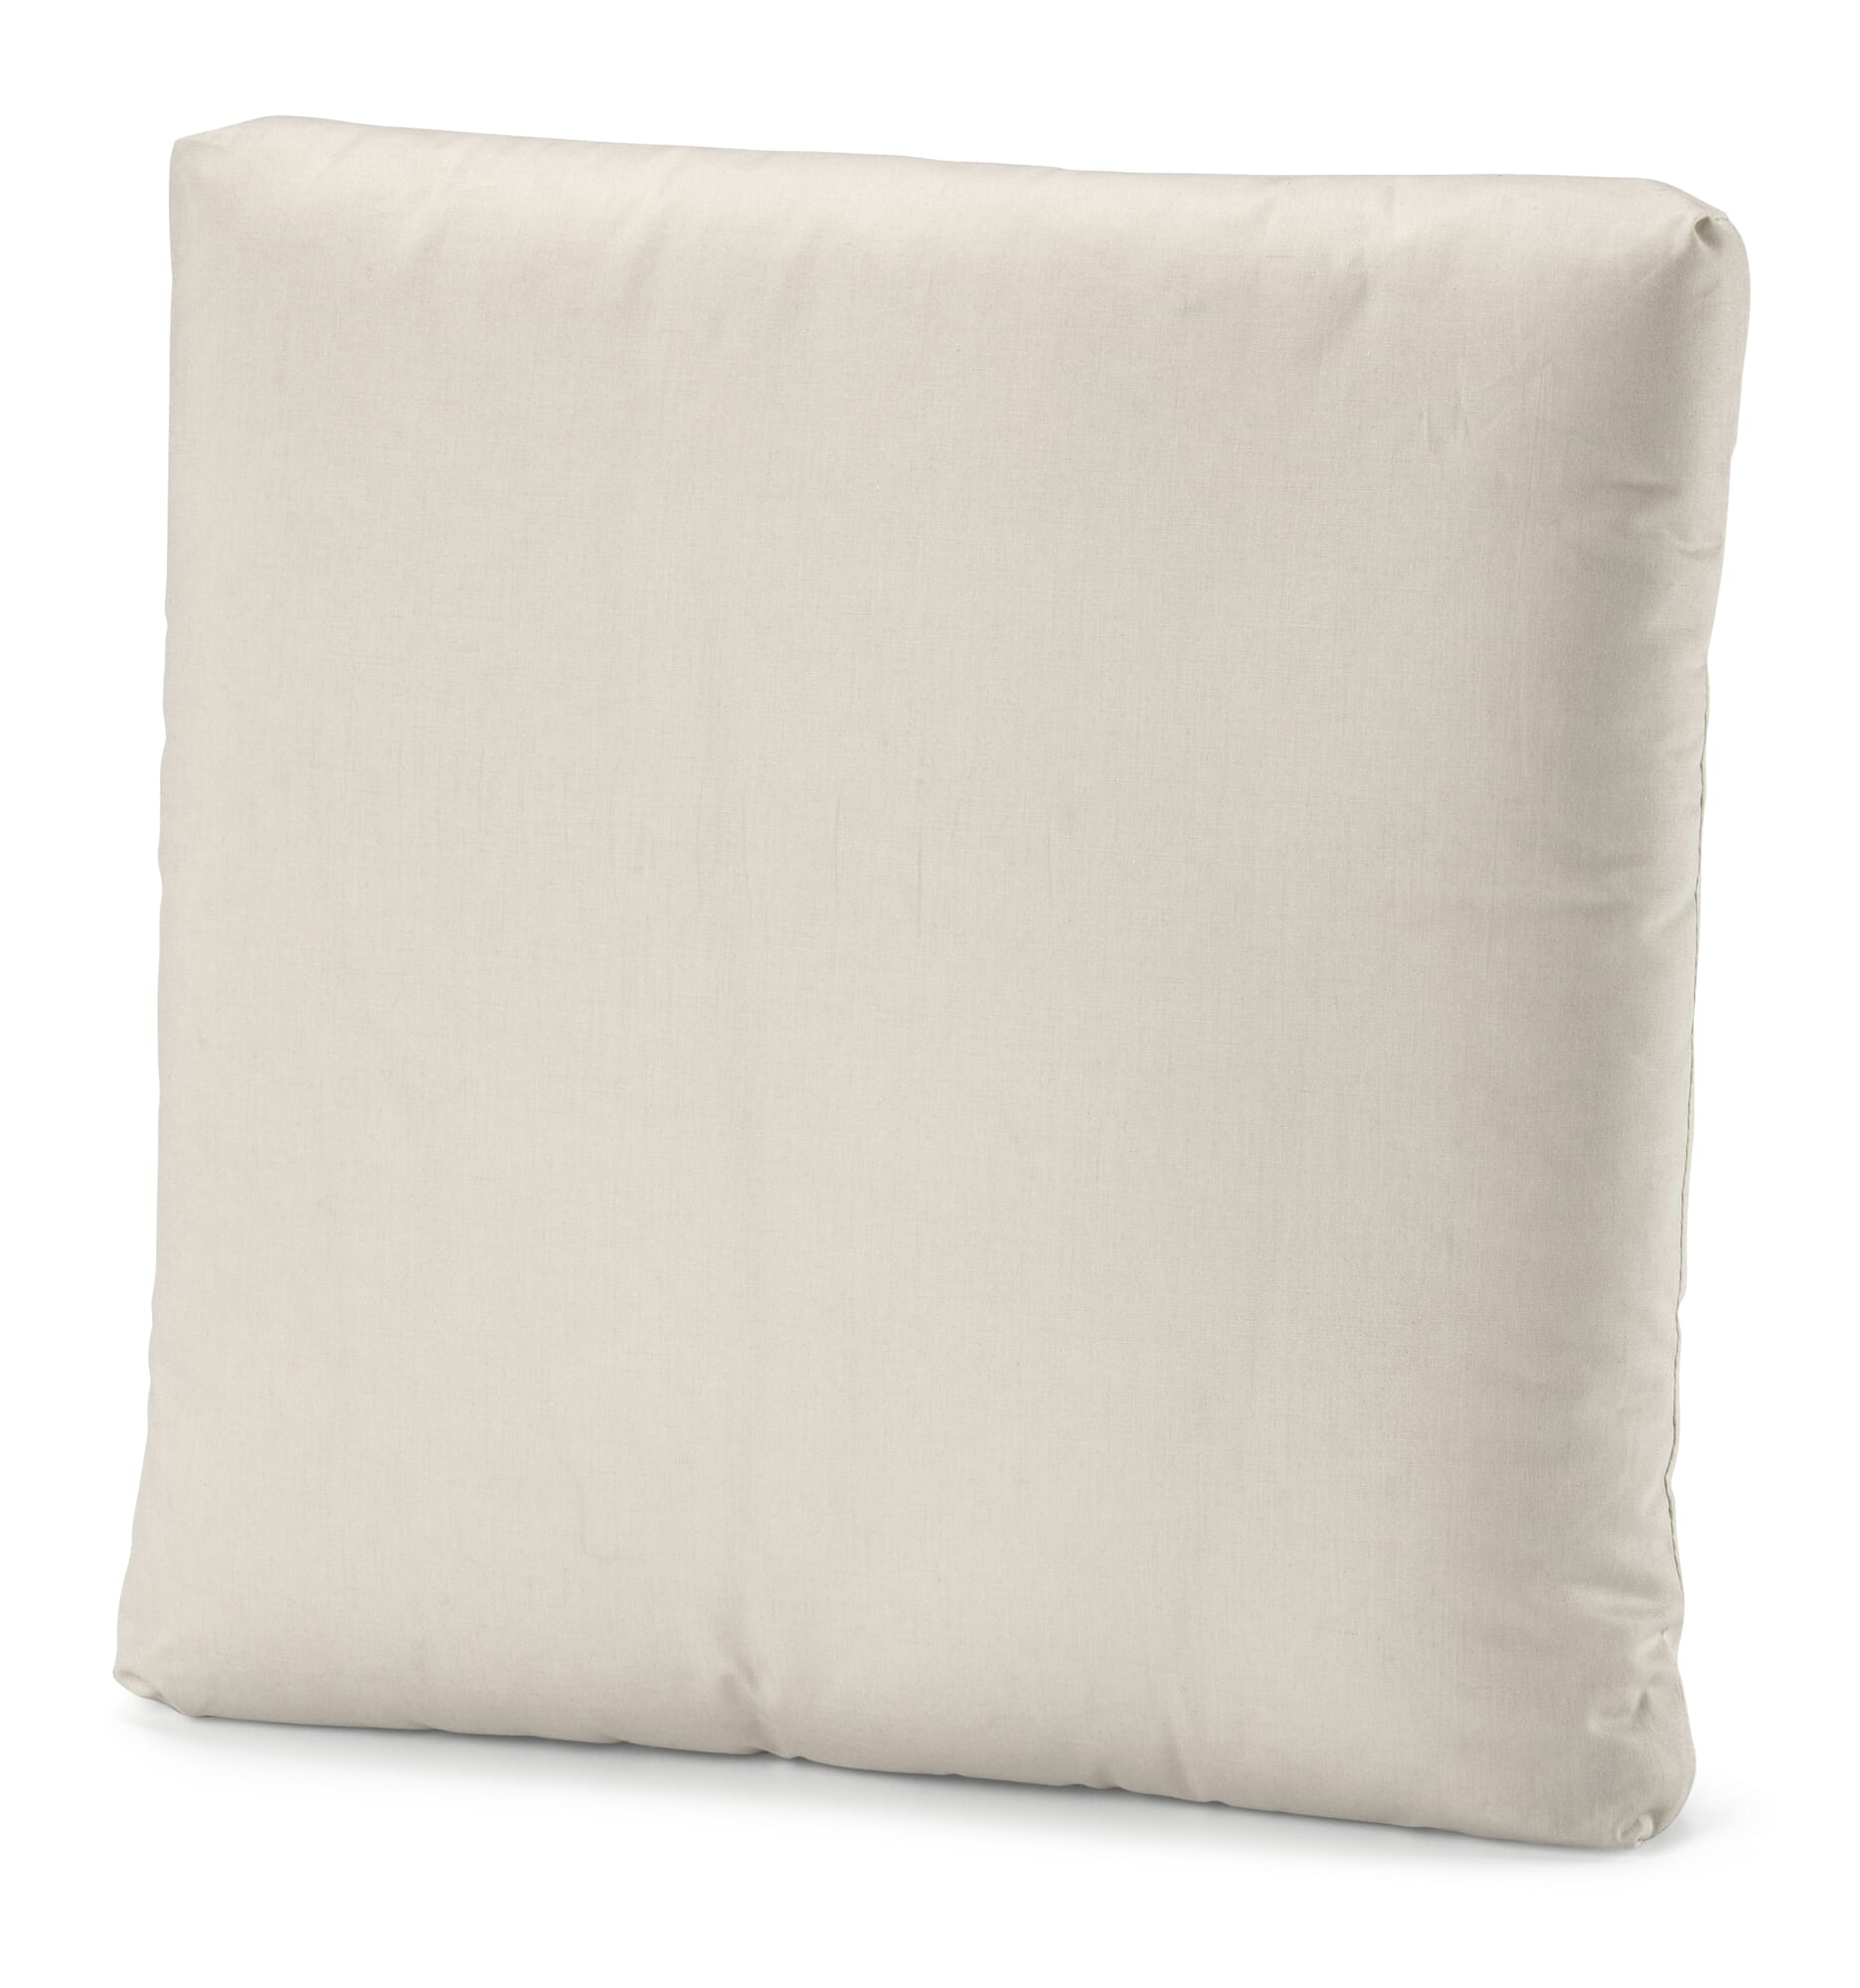 Pillow filling horsehair, 35 × 35 cm